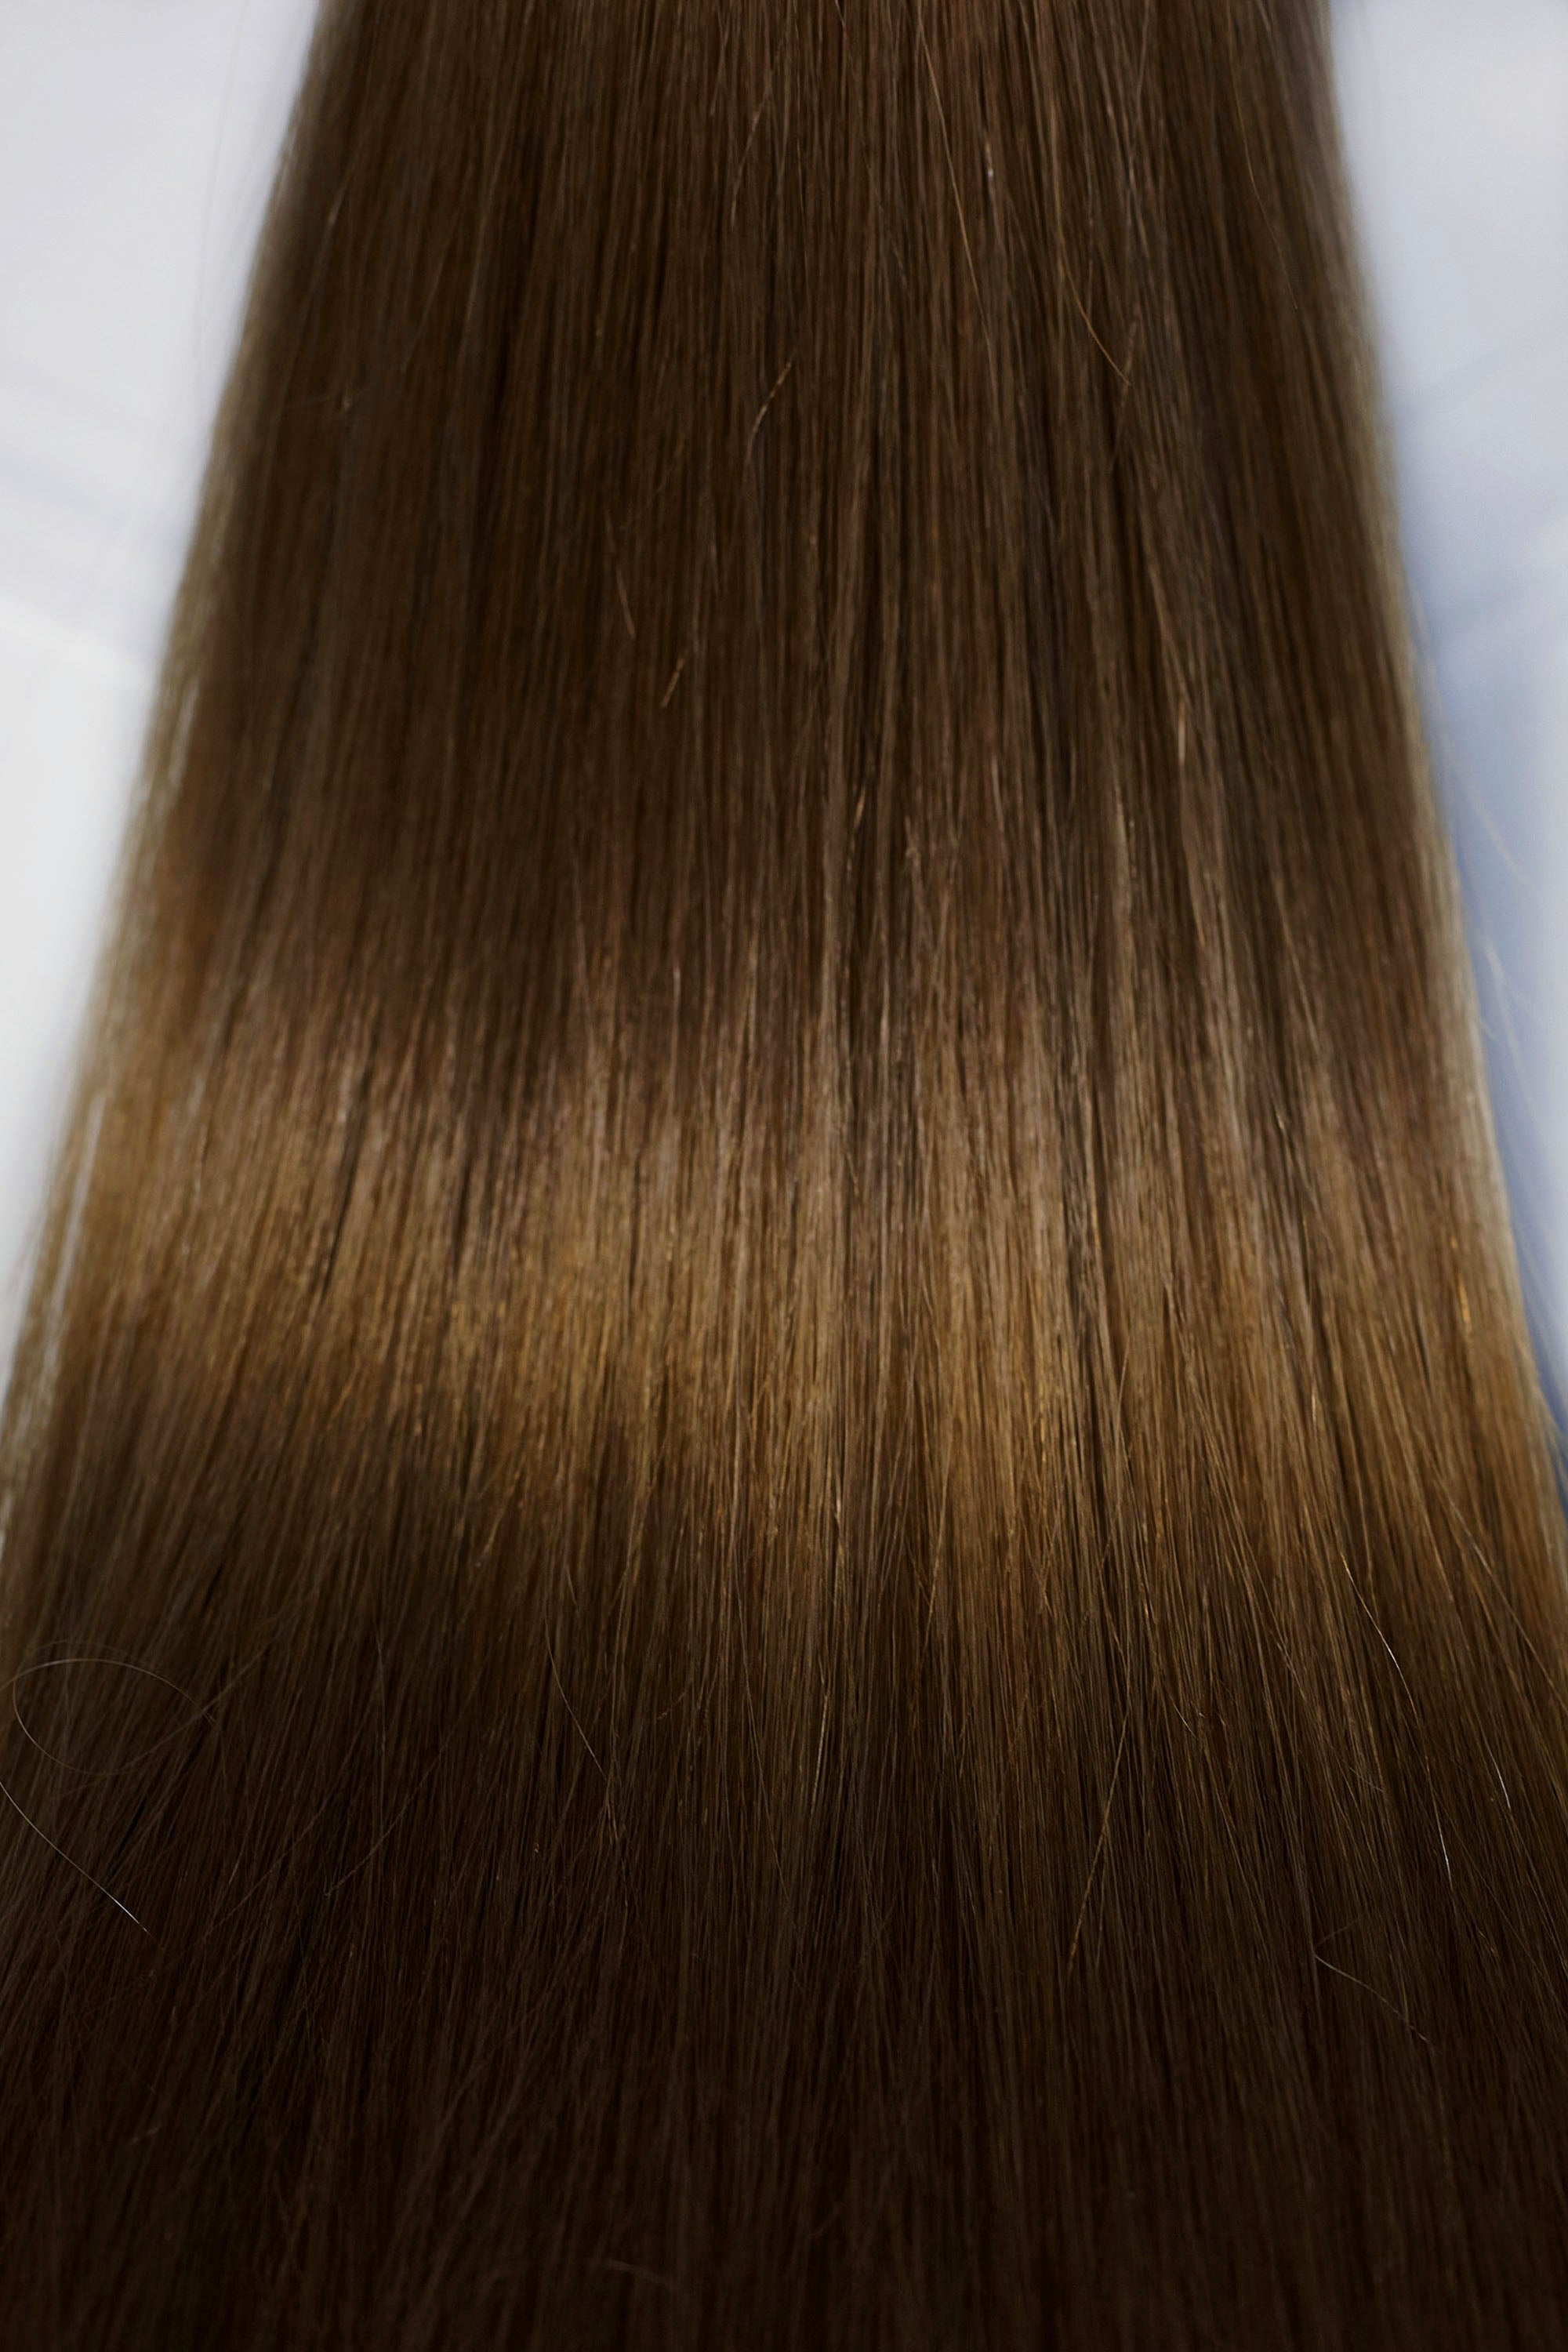 Behair professional Keratin Tip "Premium" 28" (70cm) Natural Straight Honey Walnut Brown #5 - 25g (1g each pcs) hair extensions